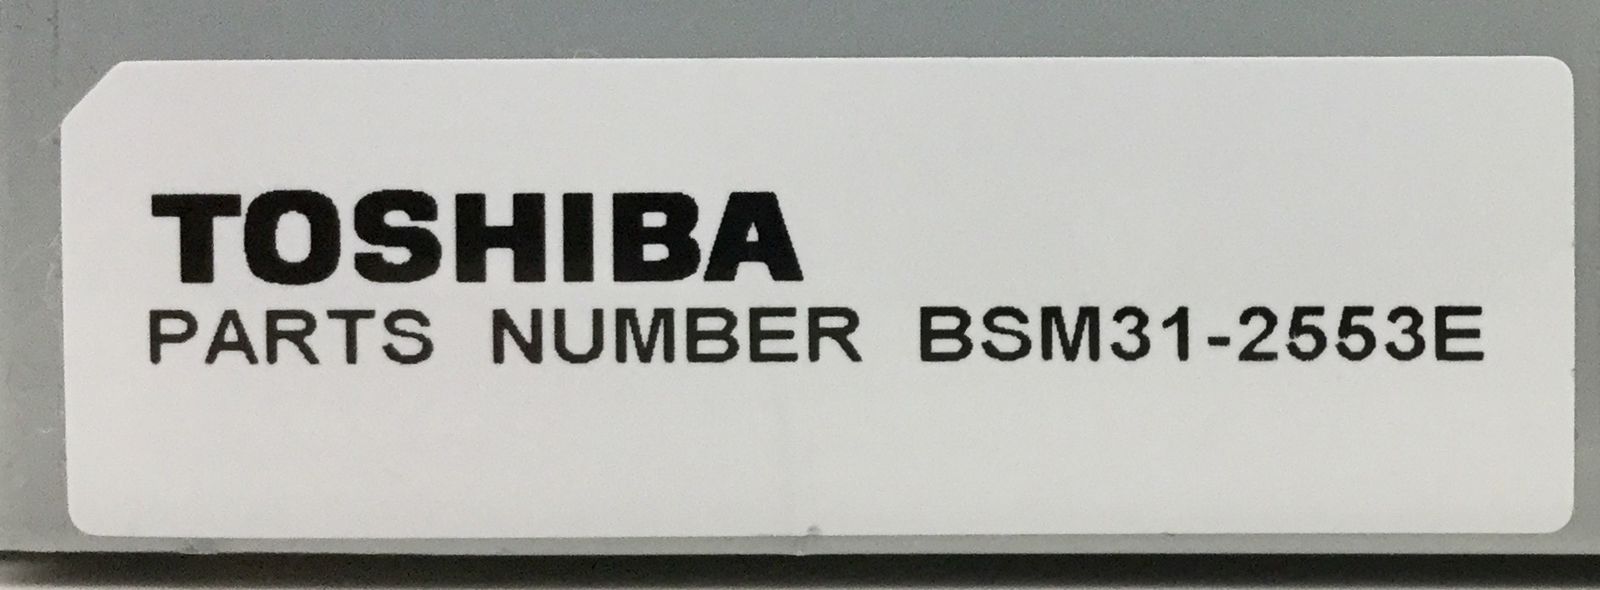 Toshiba SSA-770A Ultrasound BSM31-2553E Physio Module DIAGNOSTIC ULTRASOUND MACHINES FOR SALE